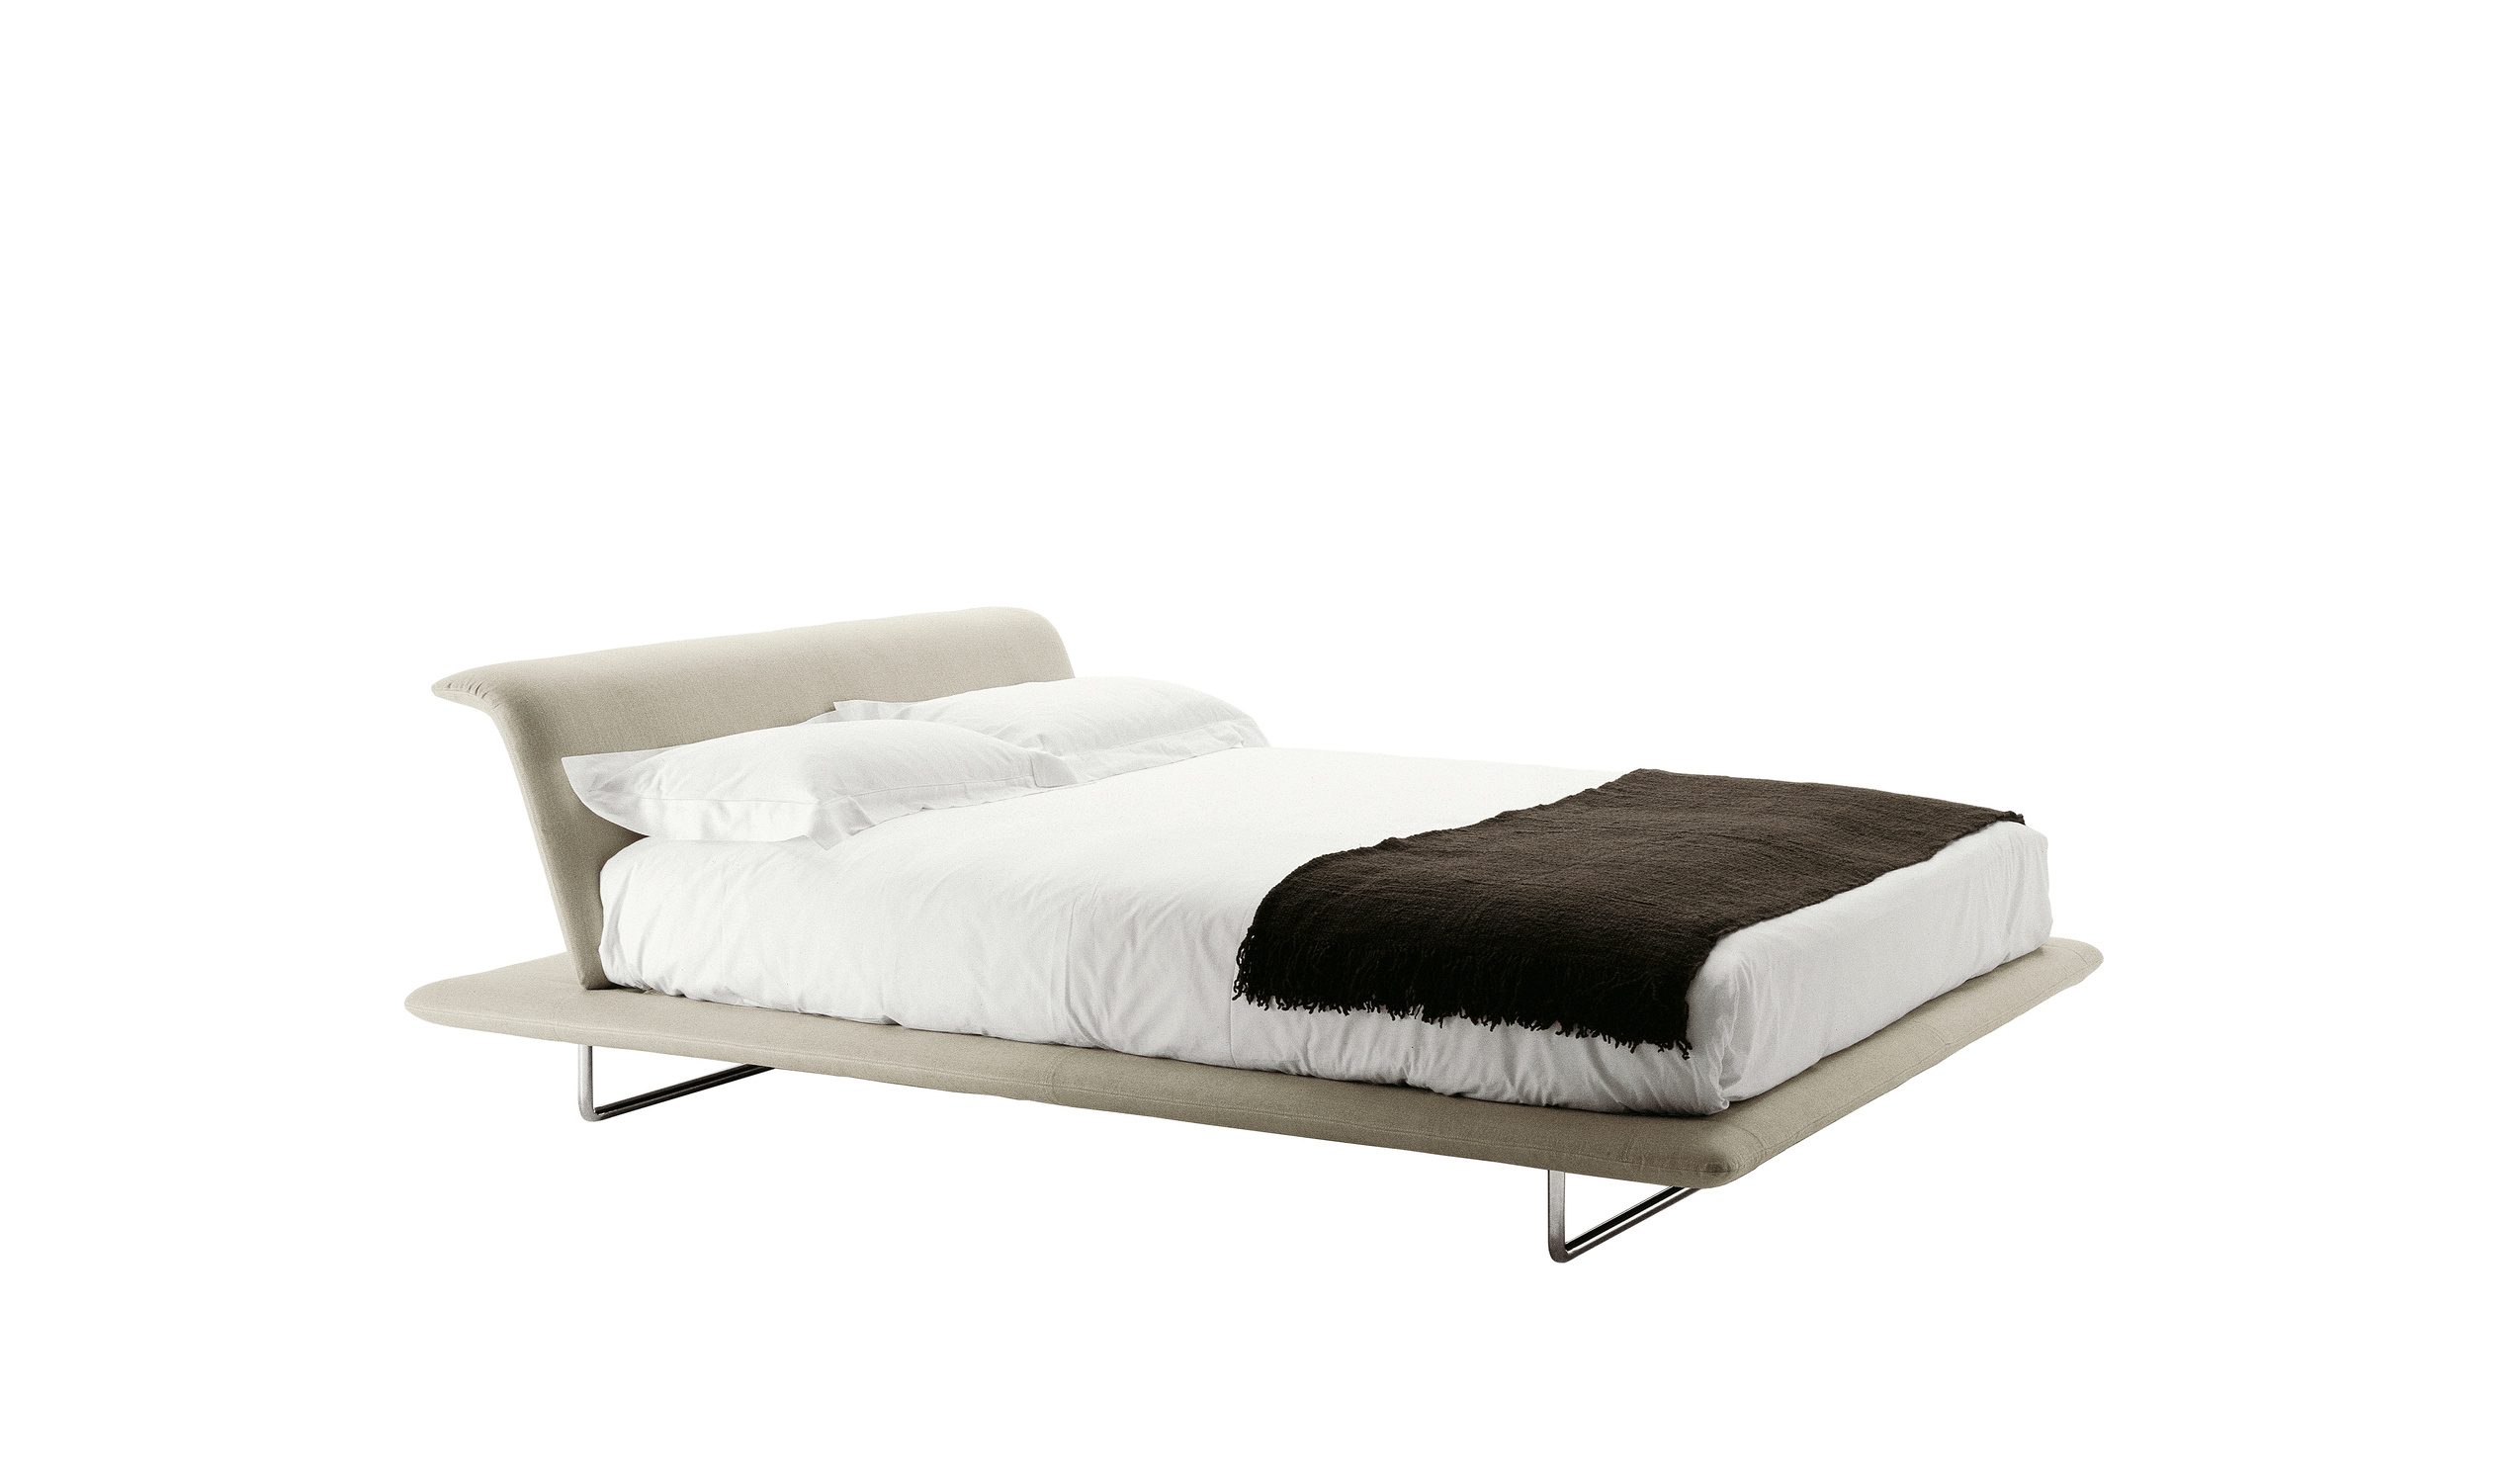 Designer Italian modern beds - Siena Beds